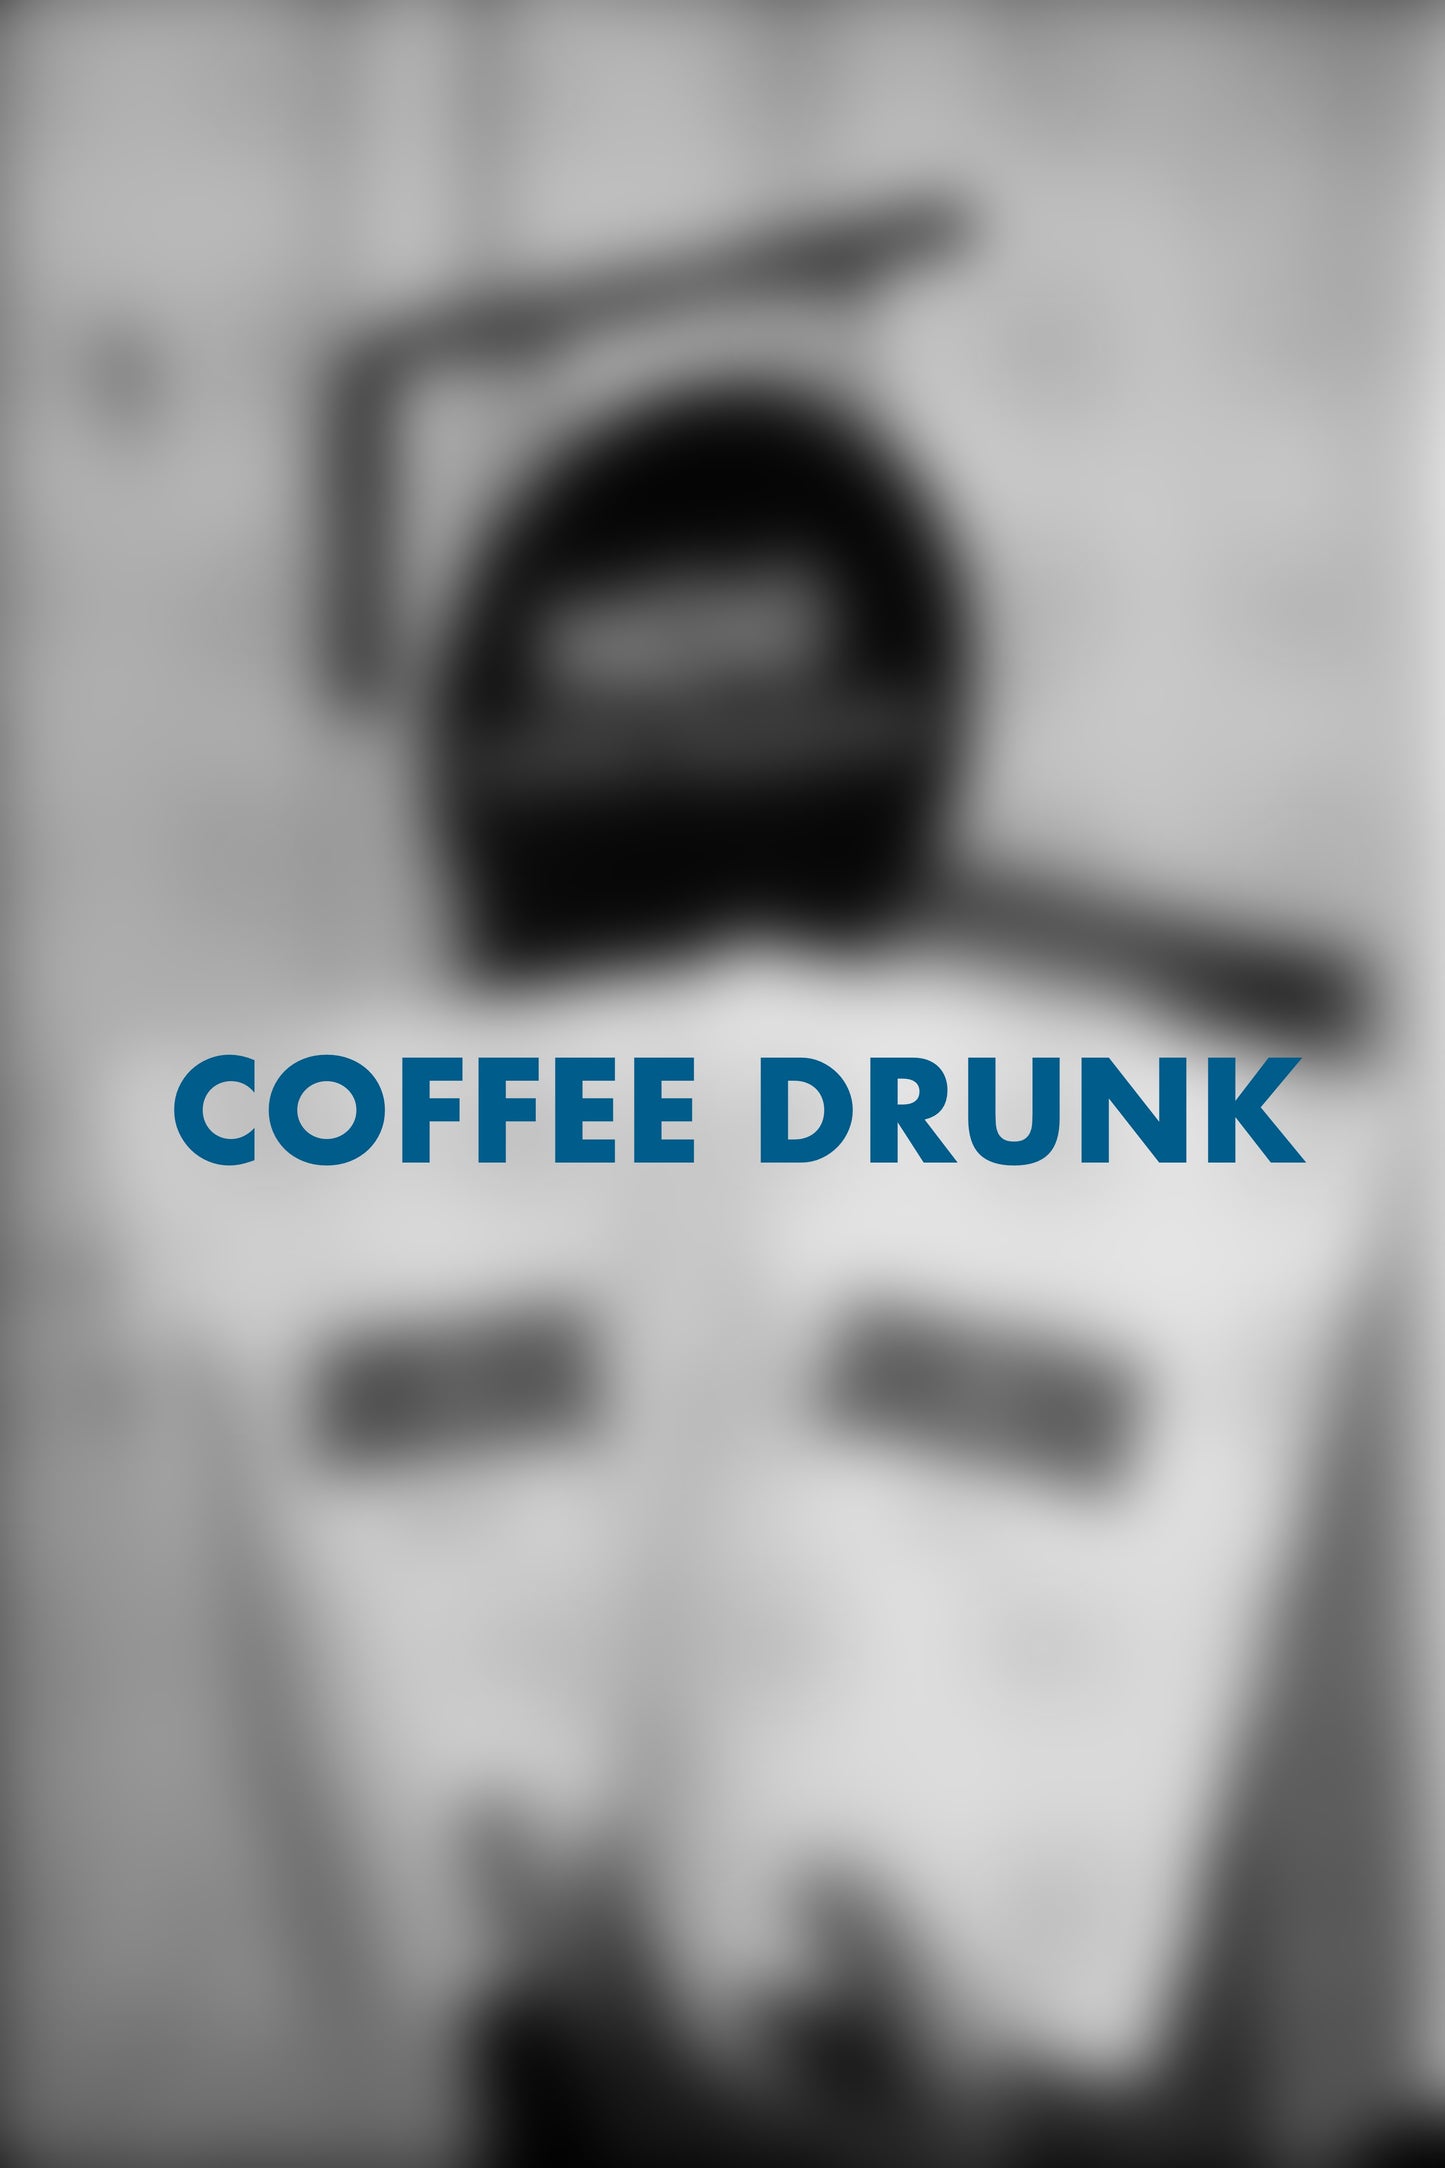 【定期便】COFFEE DRUNK セット (500g×2種)